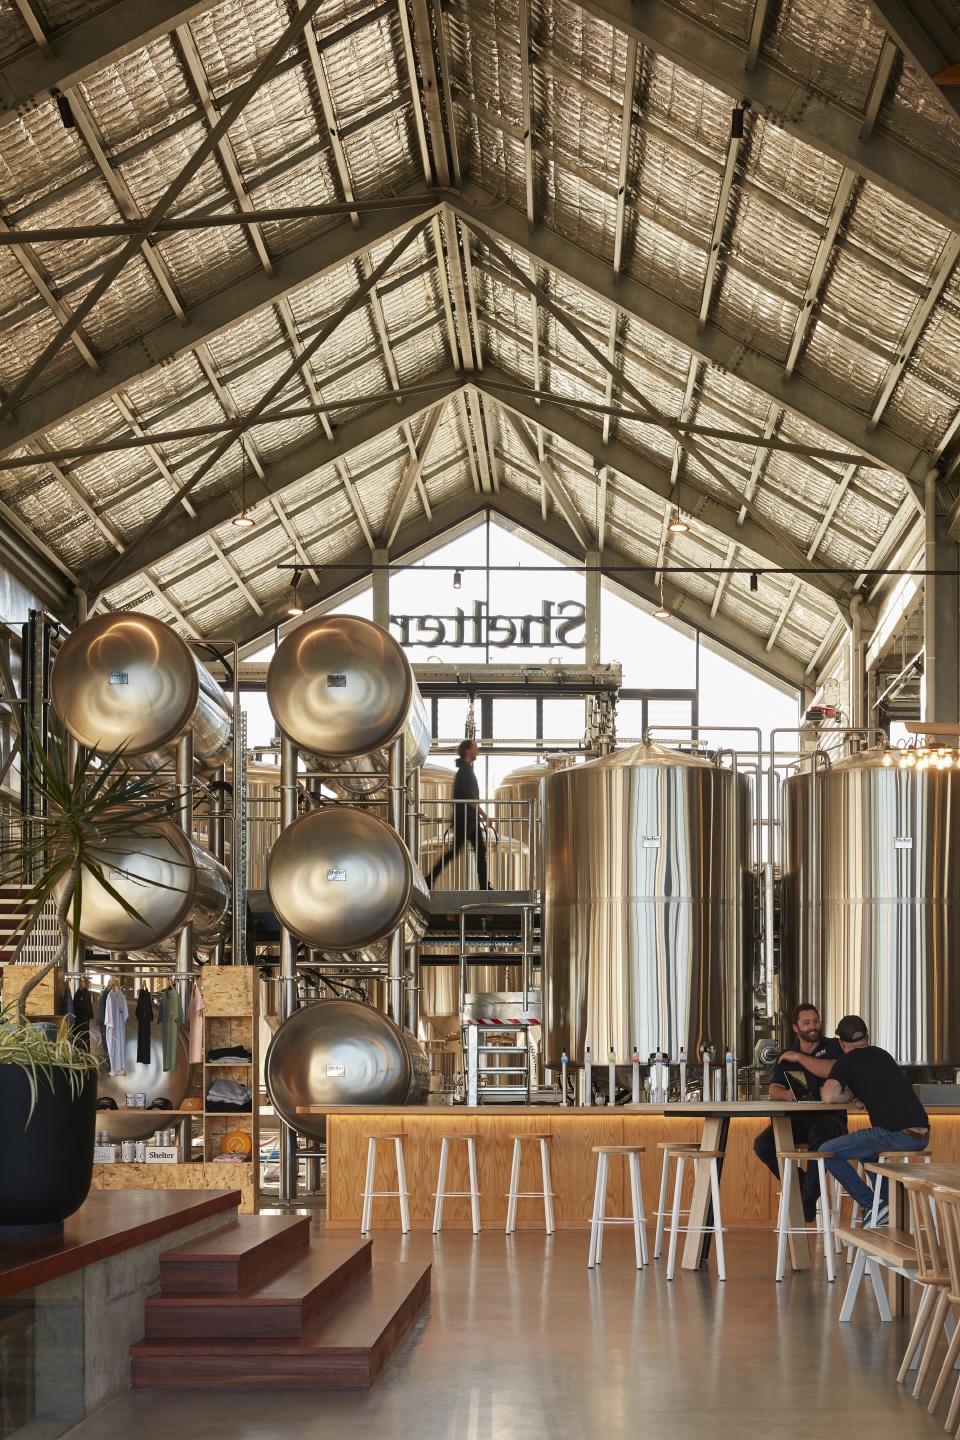 shelter brewery啤酒厂,澳大利亚 / paul burnham architect